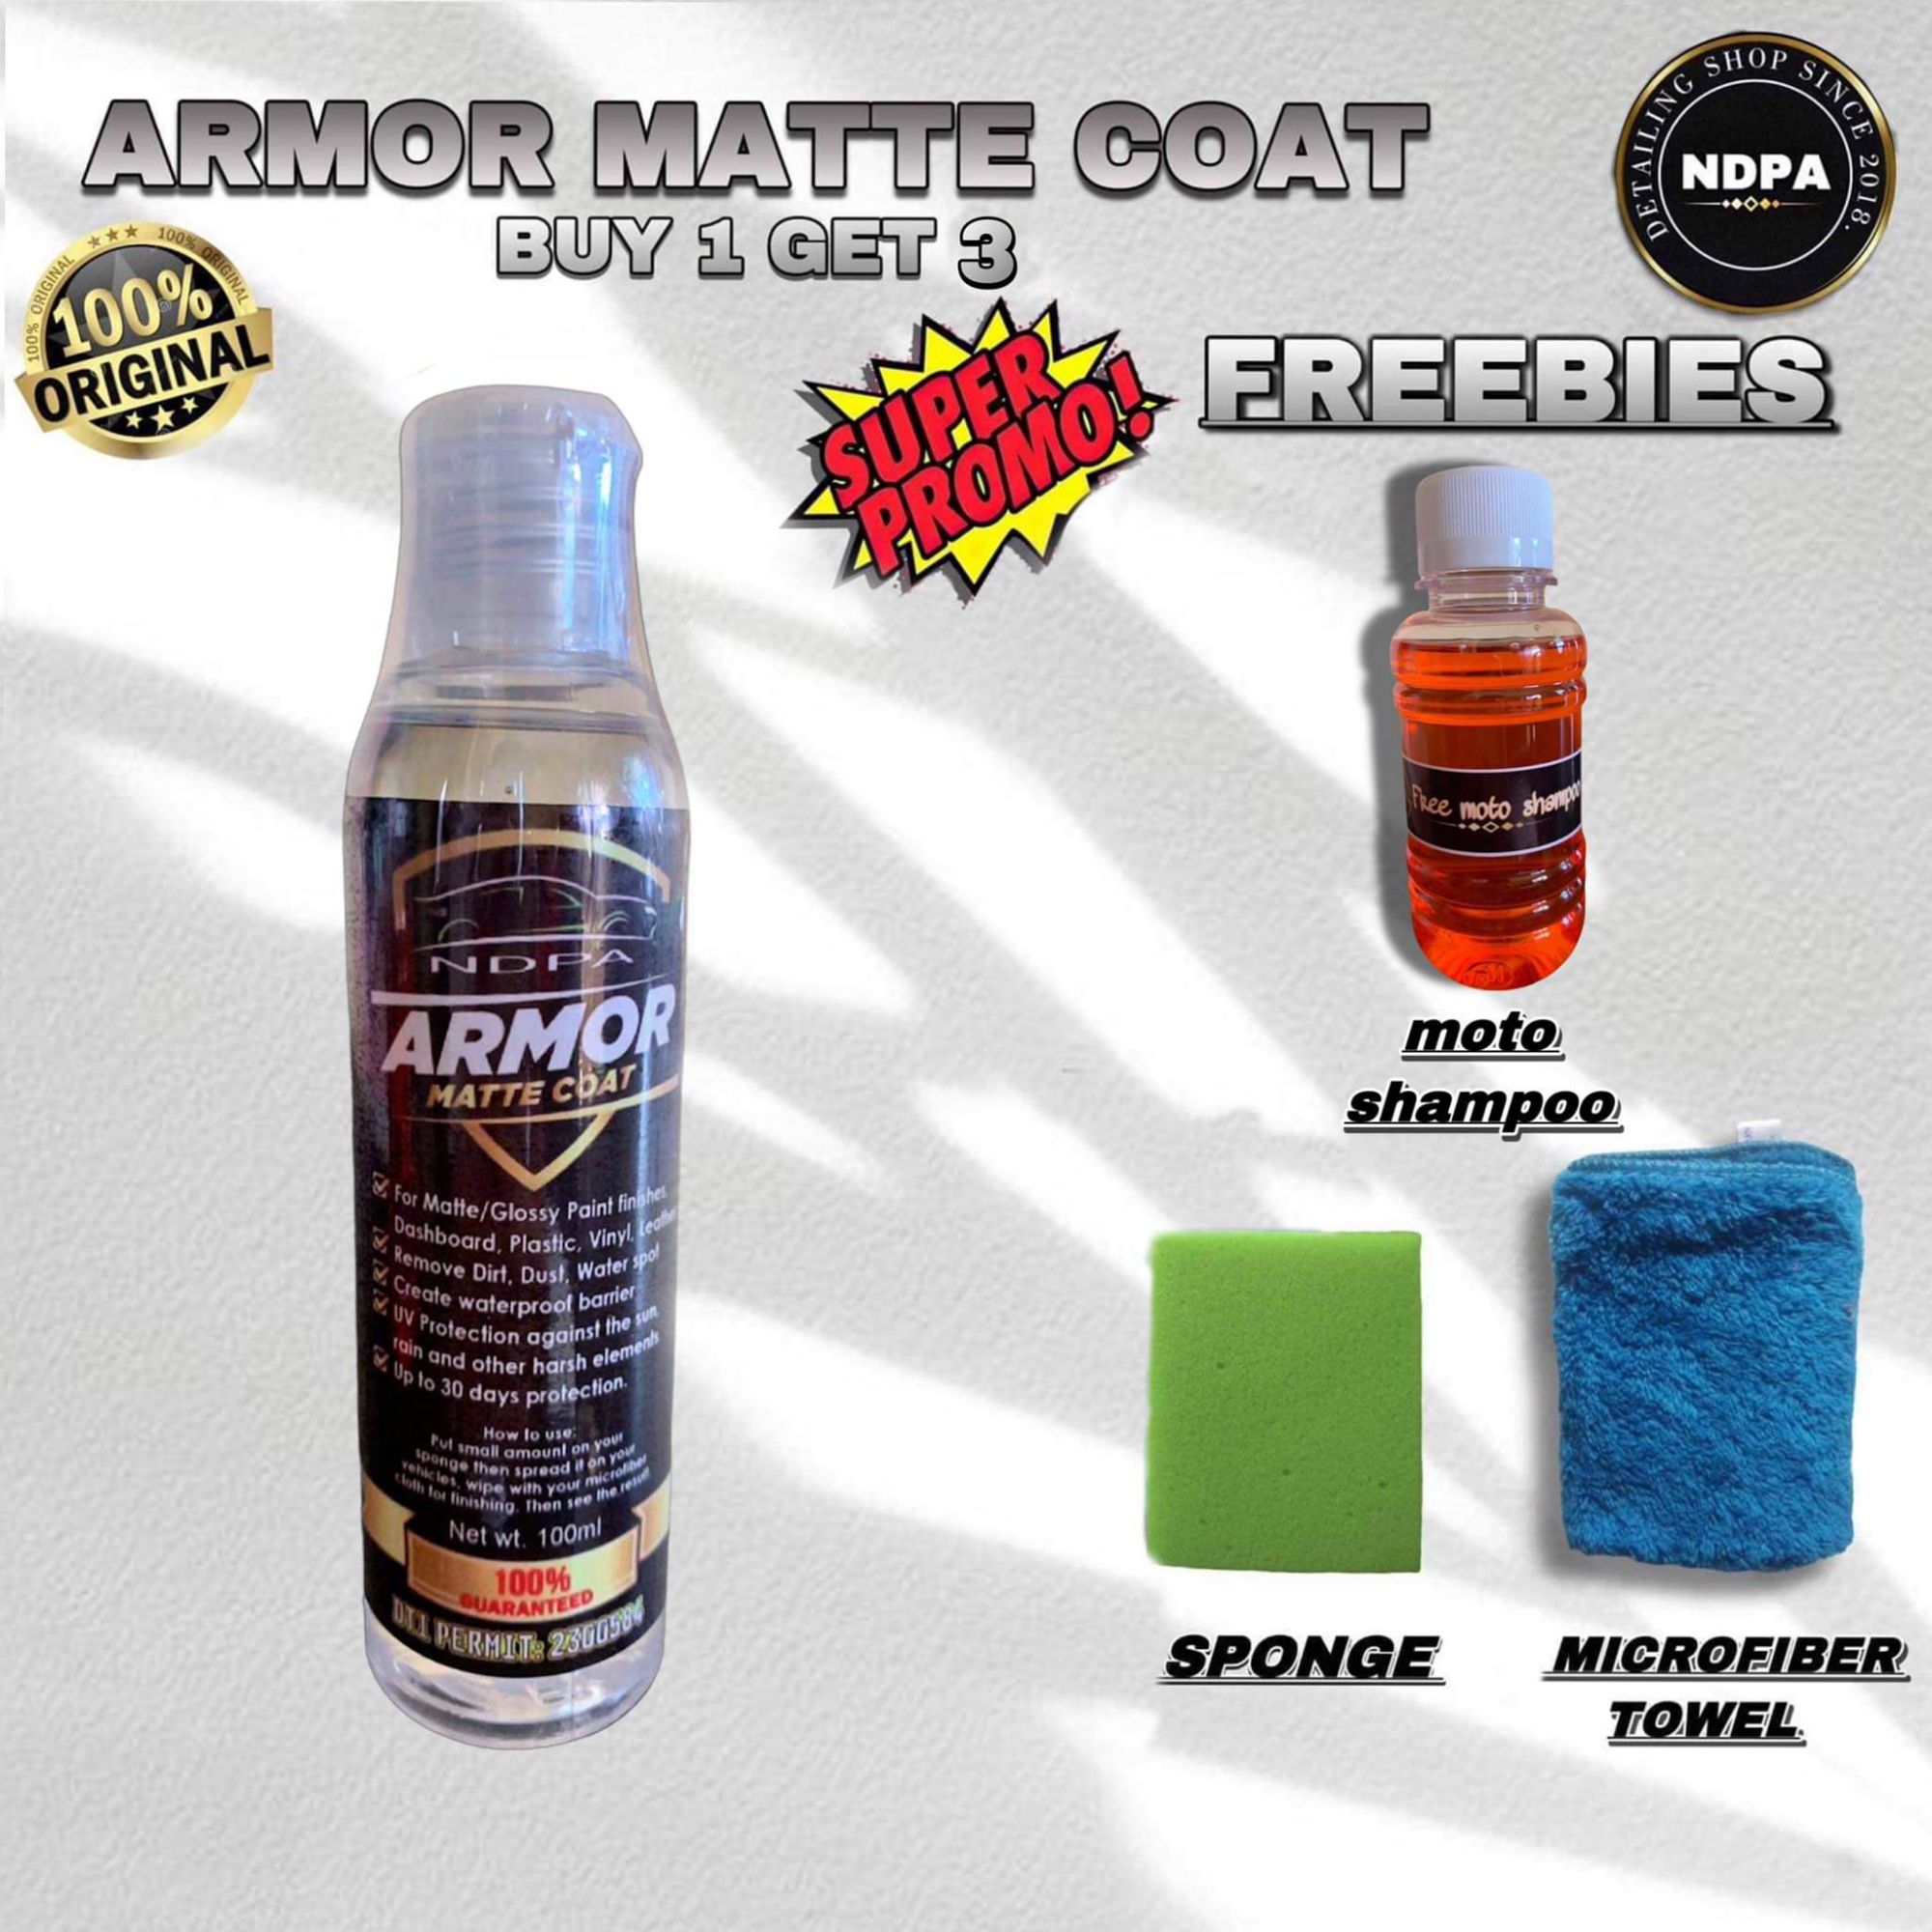 Armor matte coat 100ml with free sponge,microfiber cloth, & moto shampoo